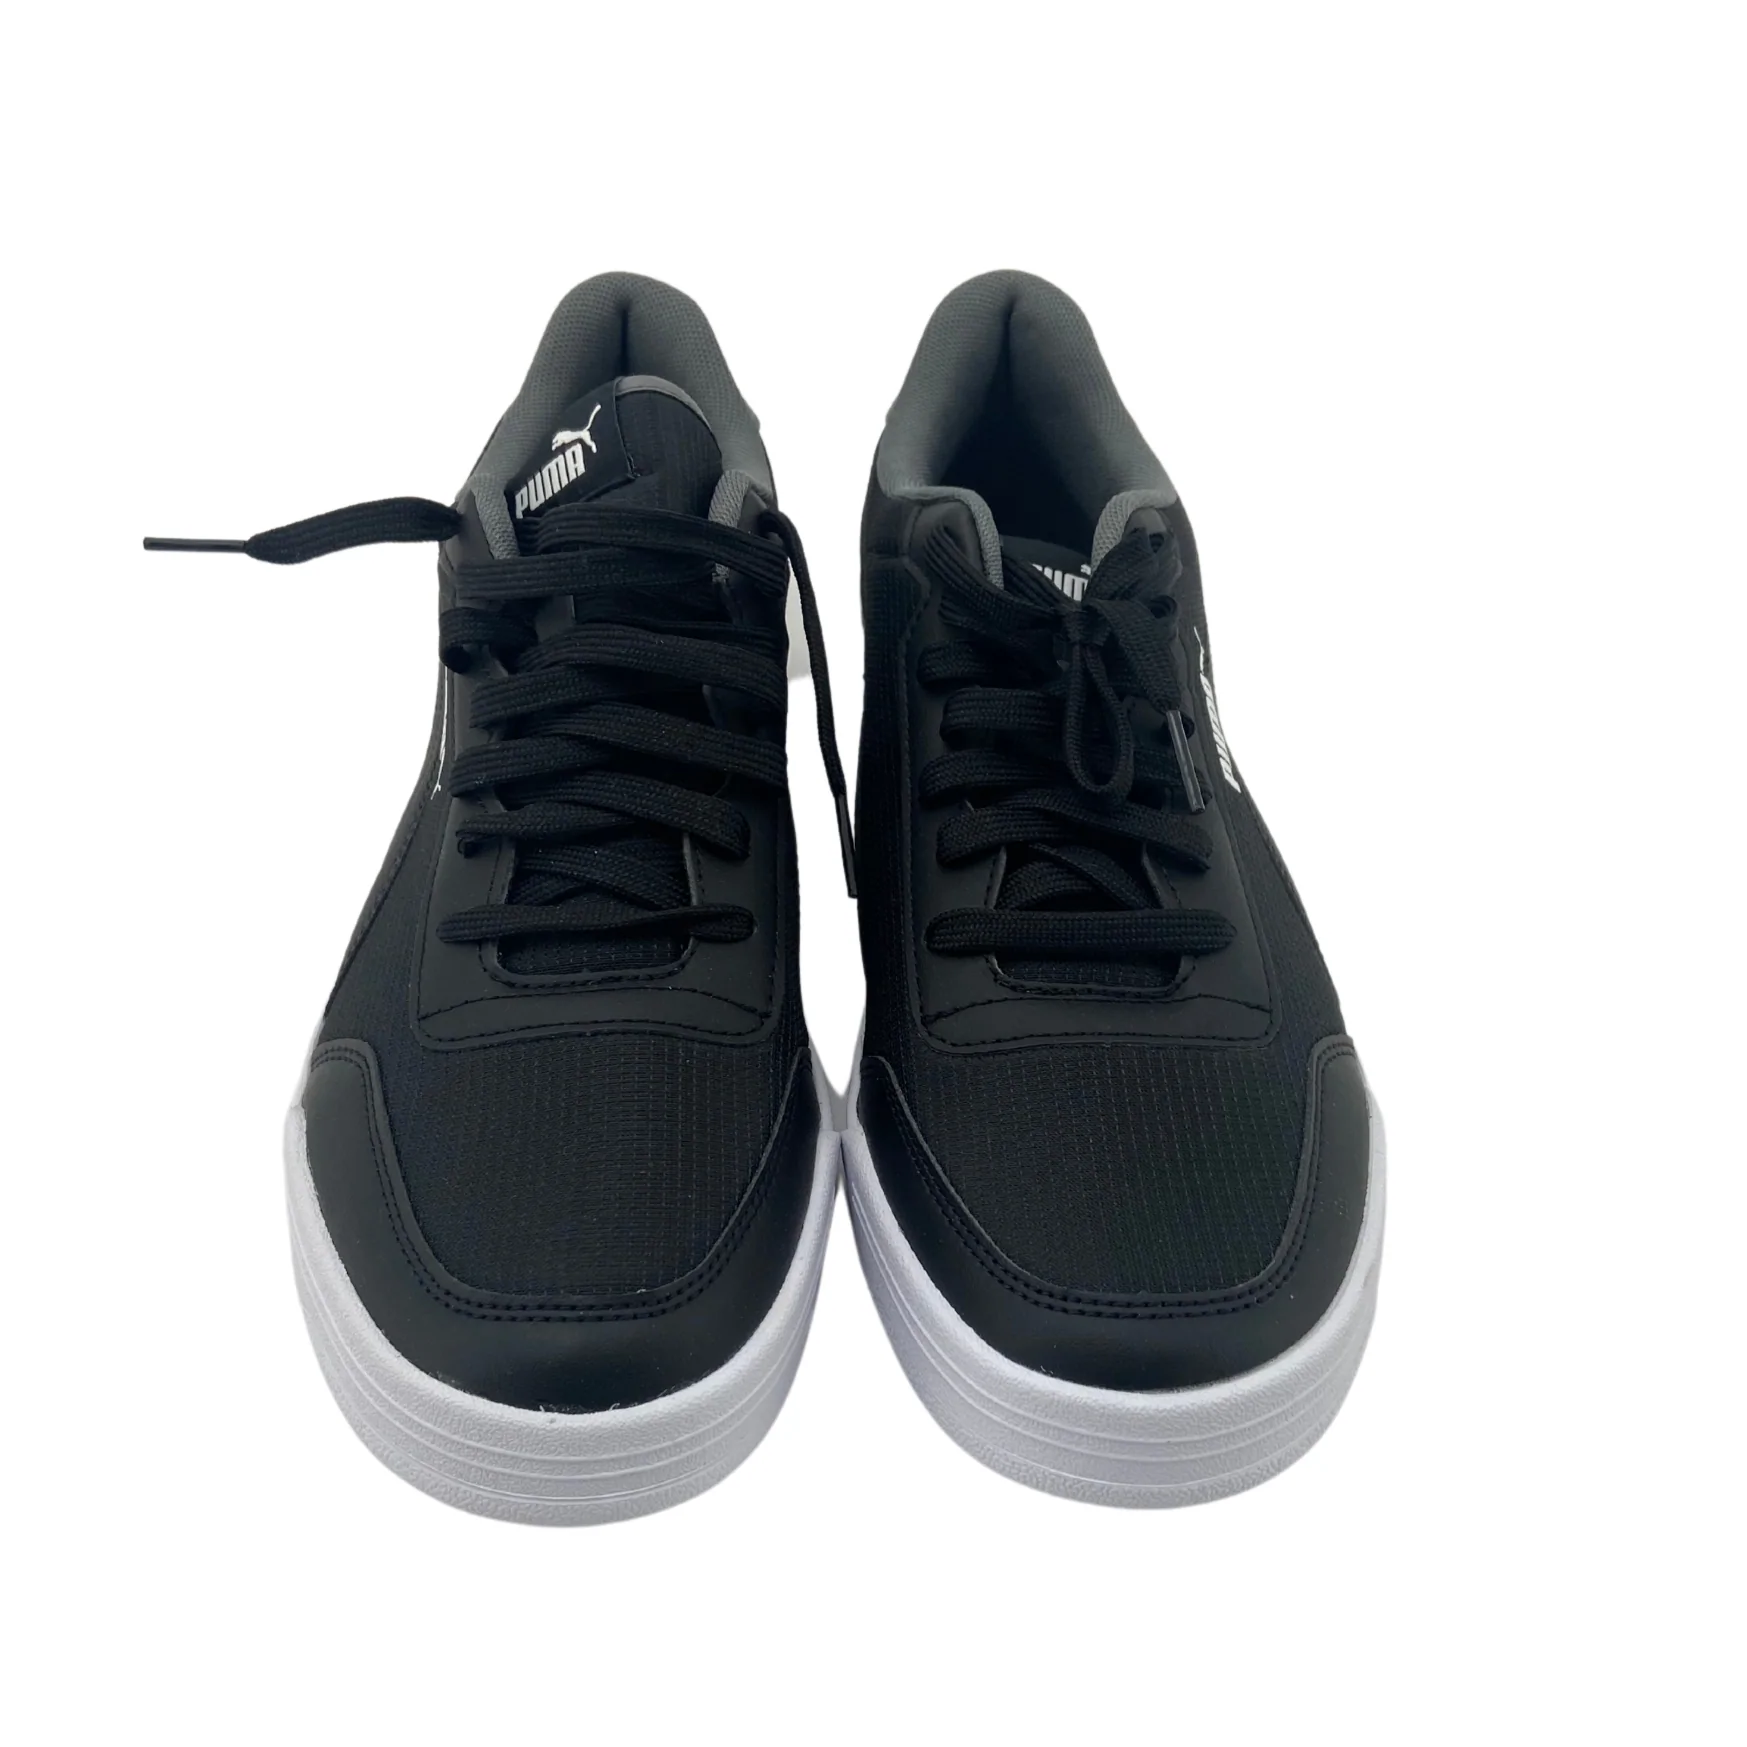 Puma Men's Running Shoe / Caracal Shoe / Black / Various Sizes